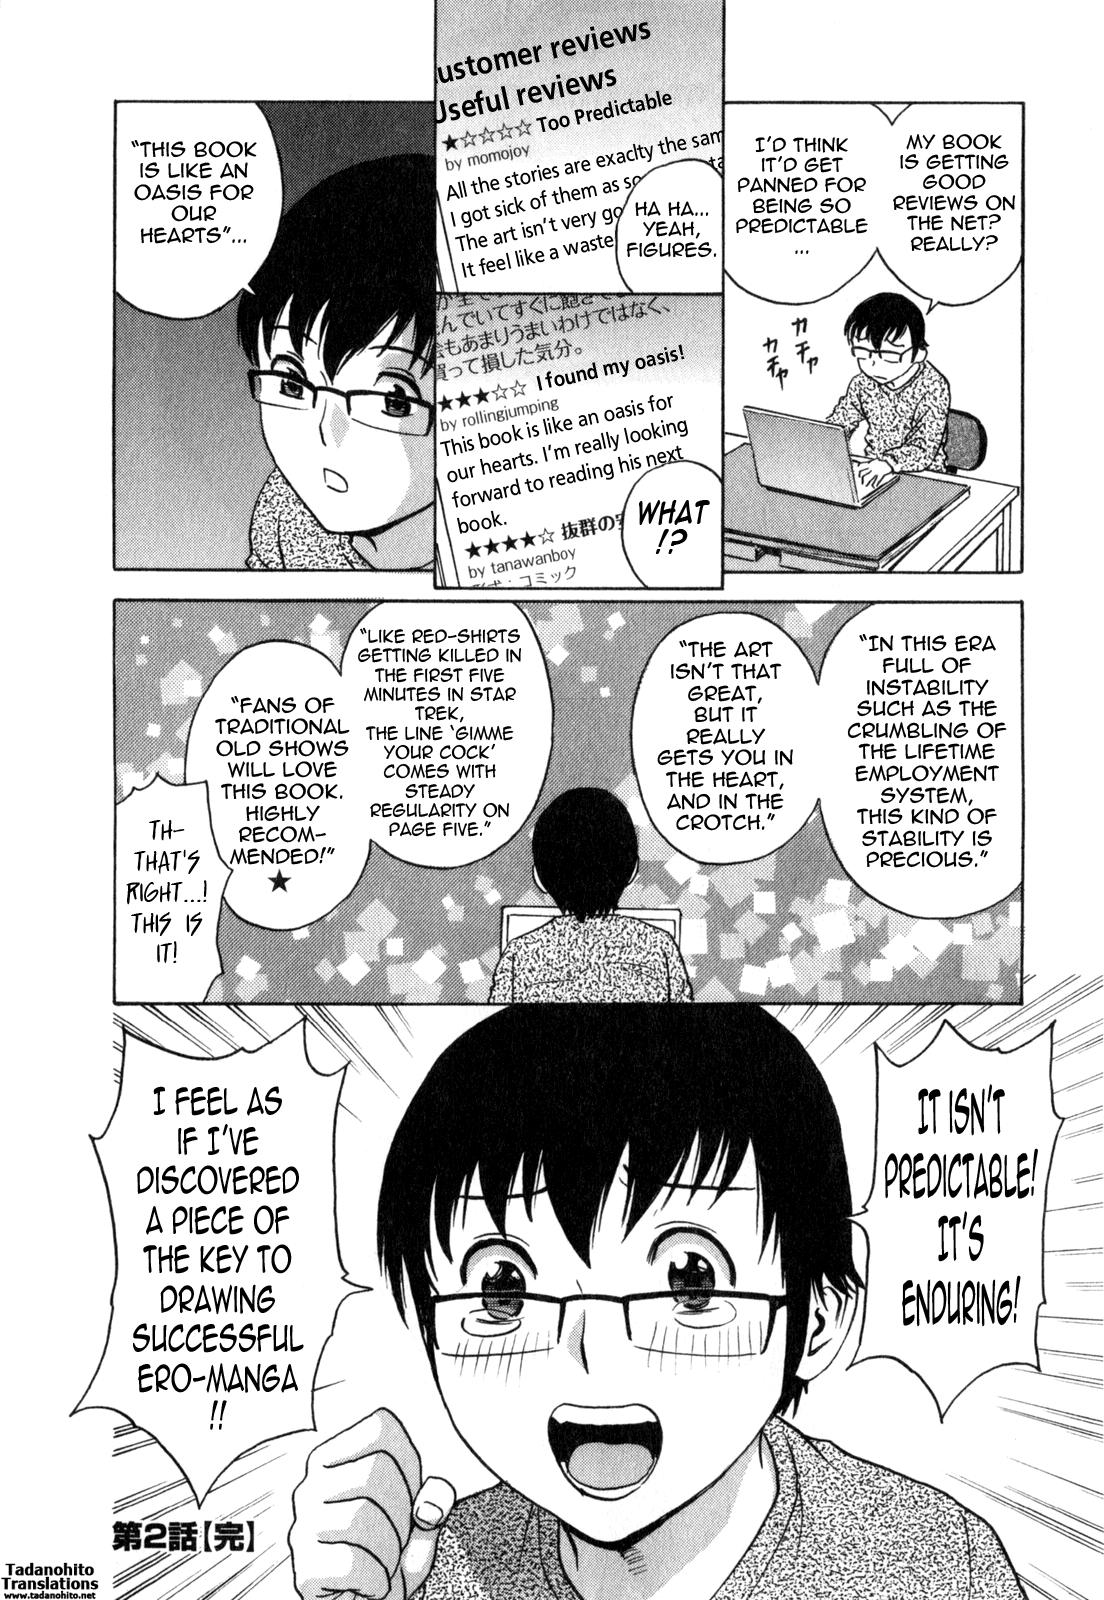 [Hidemaru] Life with Married Women Just Like a Manga 3 - Ch. 1-2 [English] {Tadanohito} 45